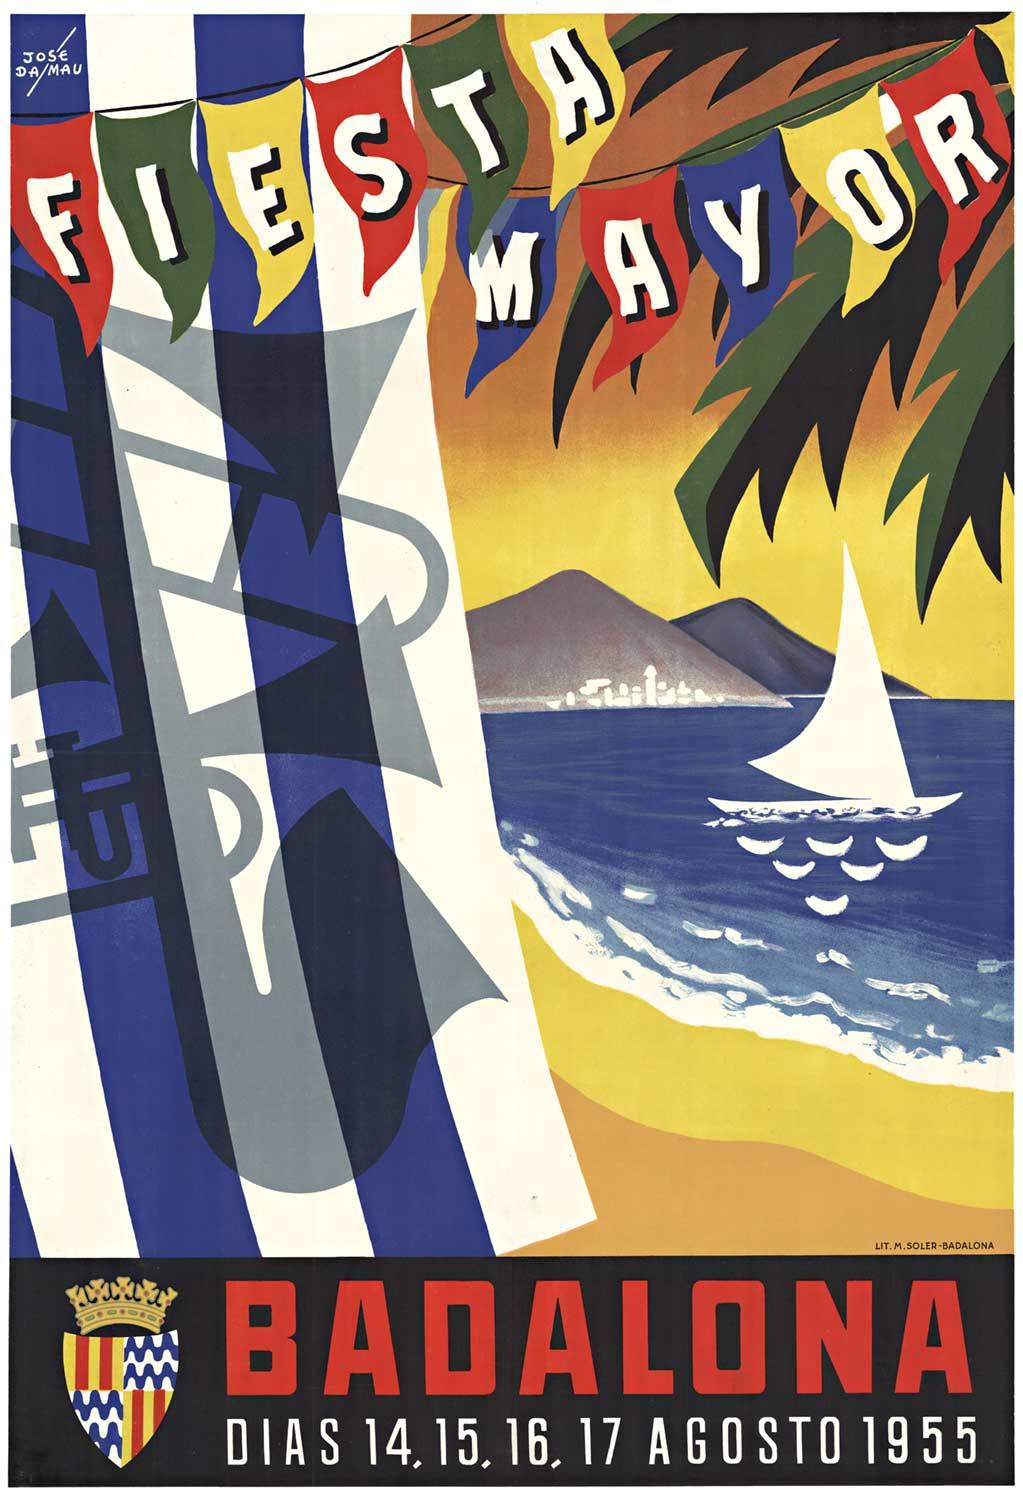 Jose Dalmau Print - Original 'Fiesta Mayor Badalona' vintage Spanish festival poster  1955